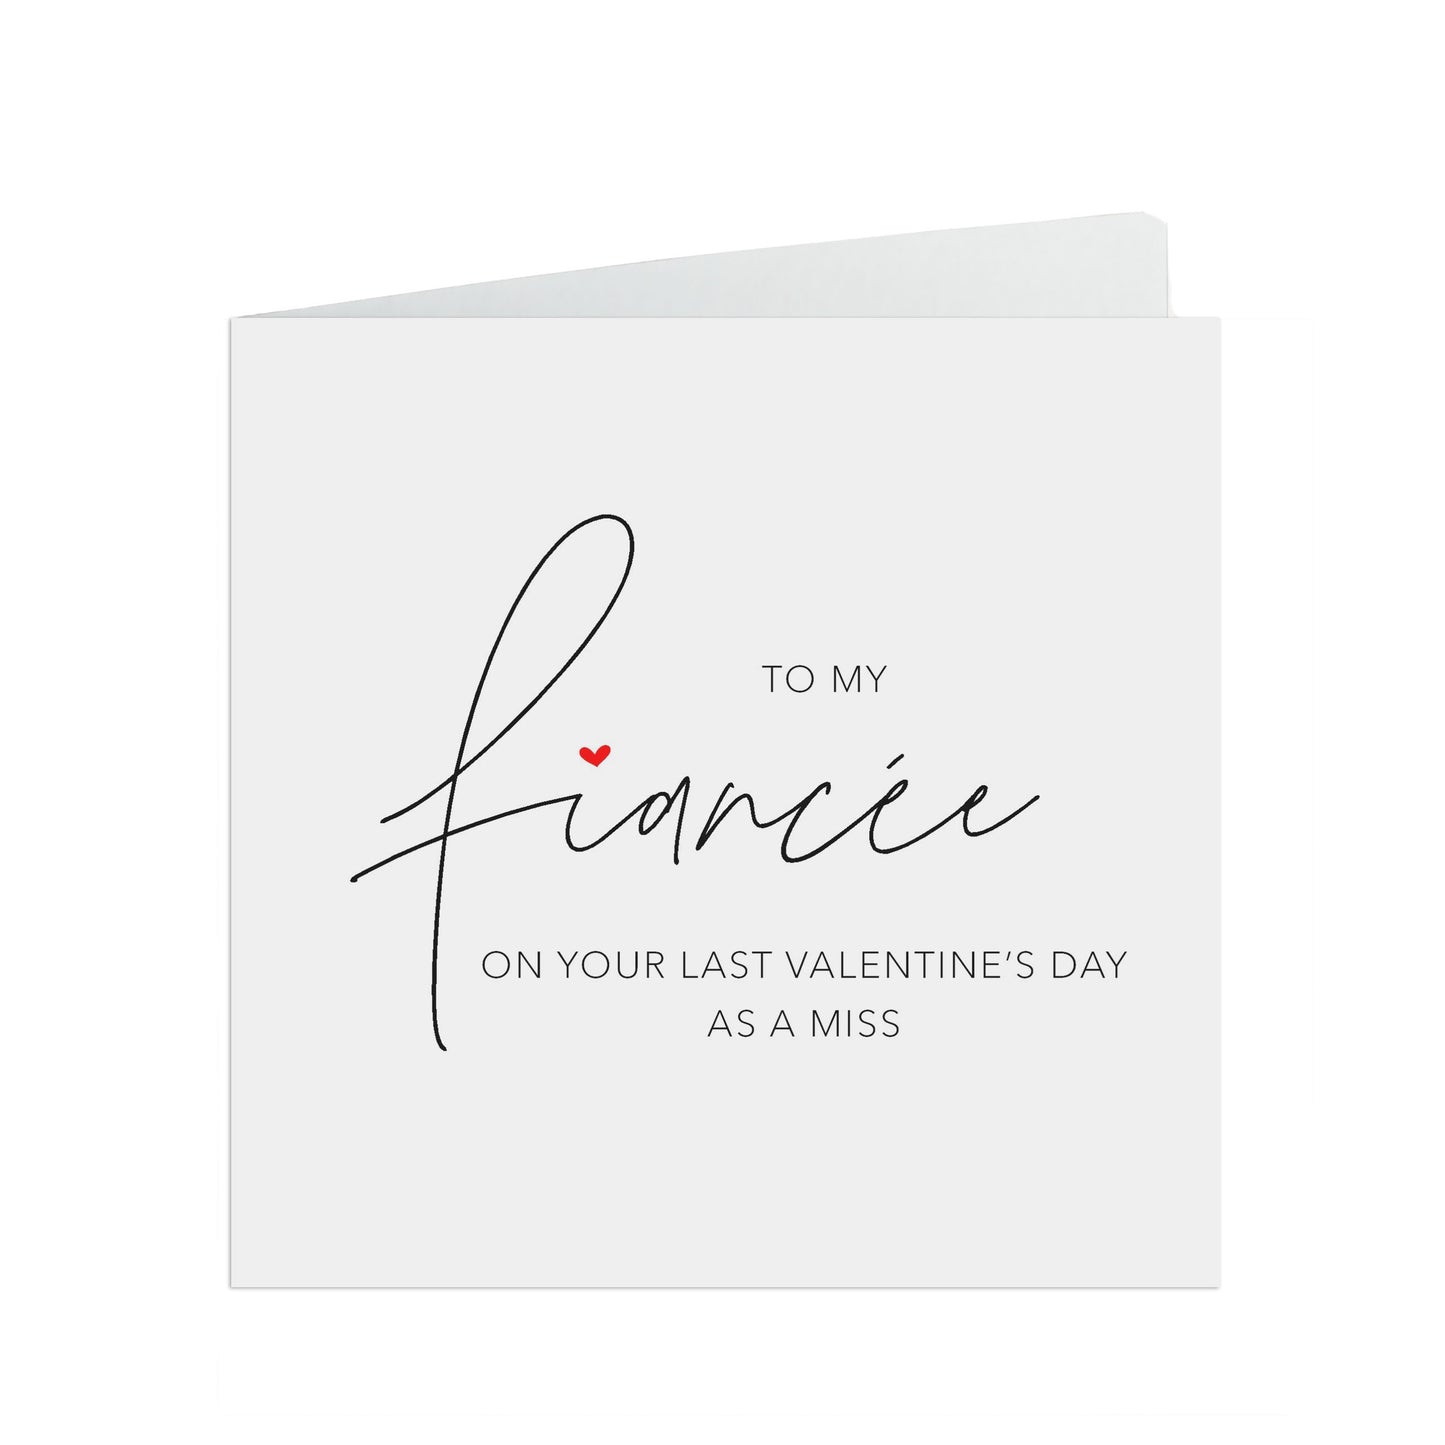 Last Valentine's As A Miss Card, Fiancée Romantic Script Design